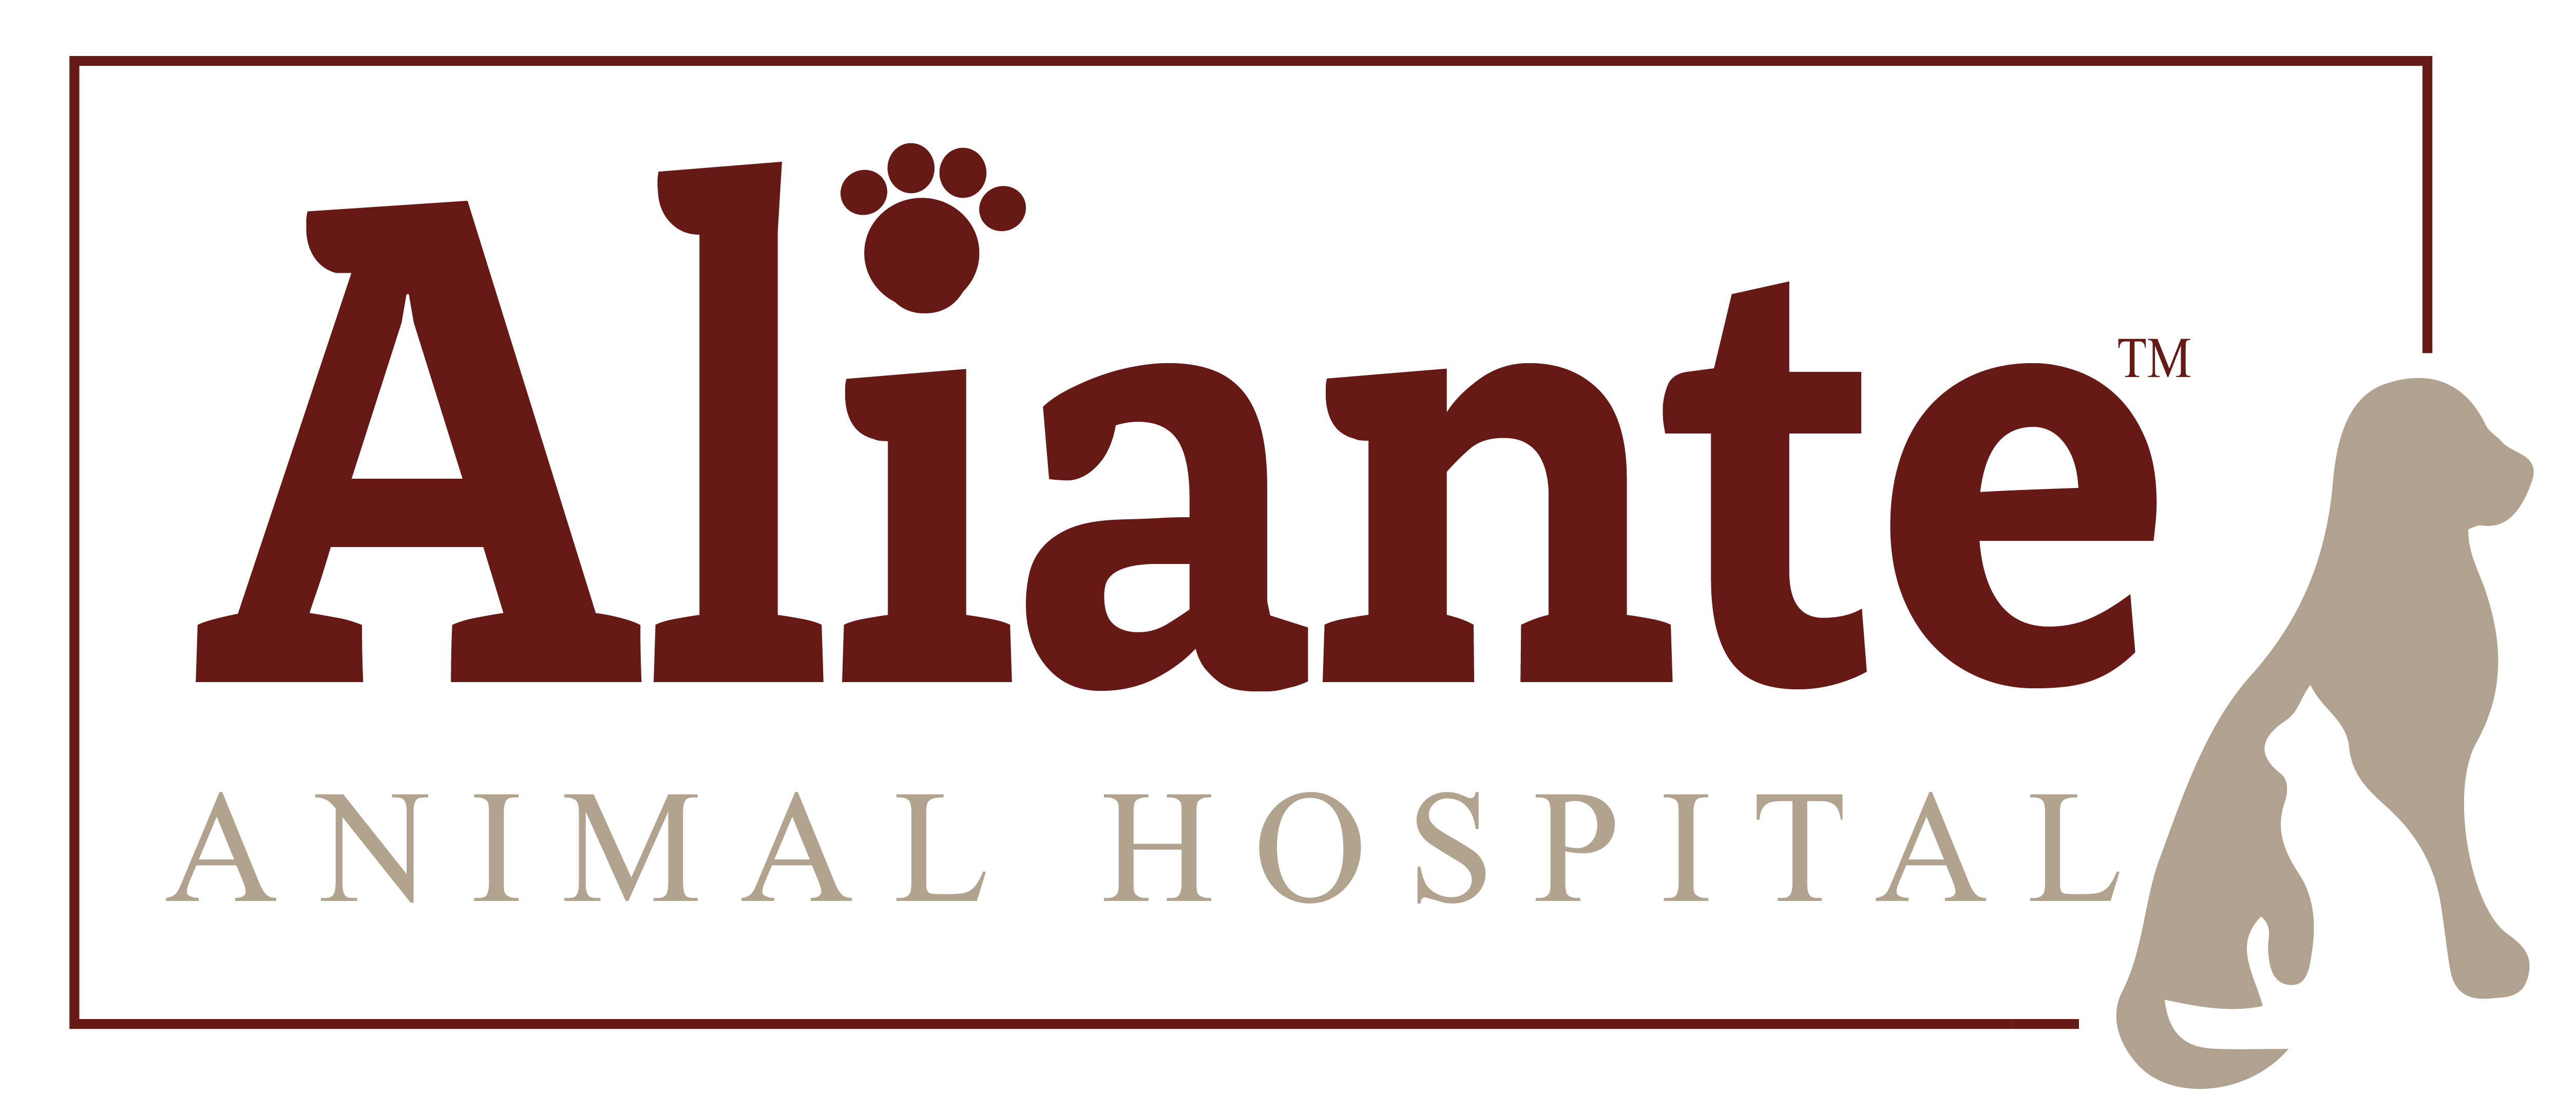 Aliante Animal Hospital -